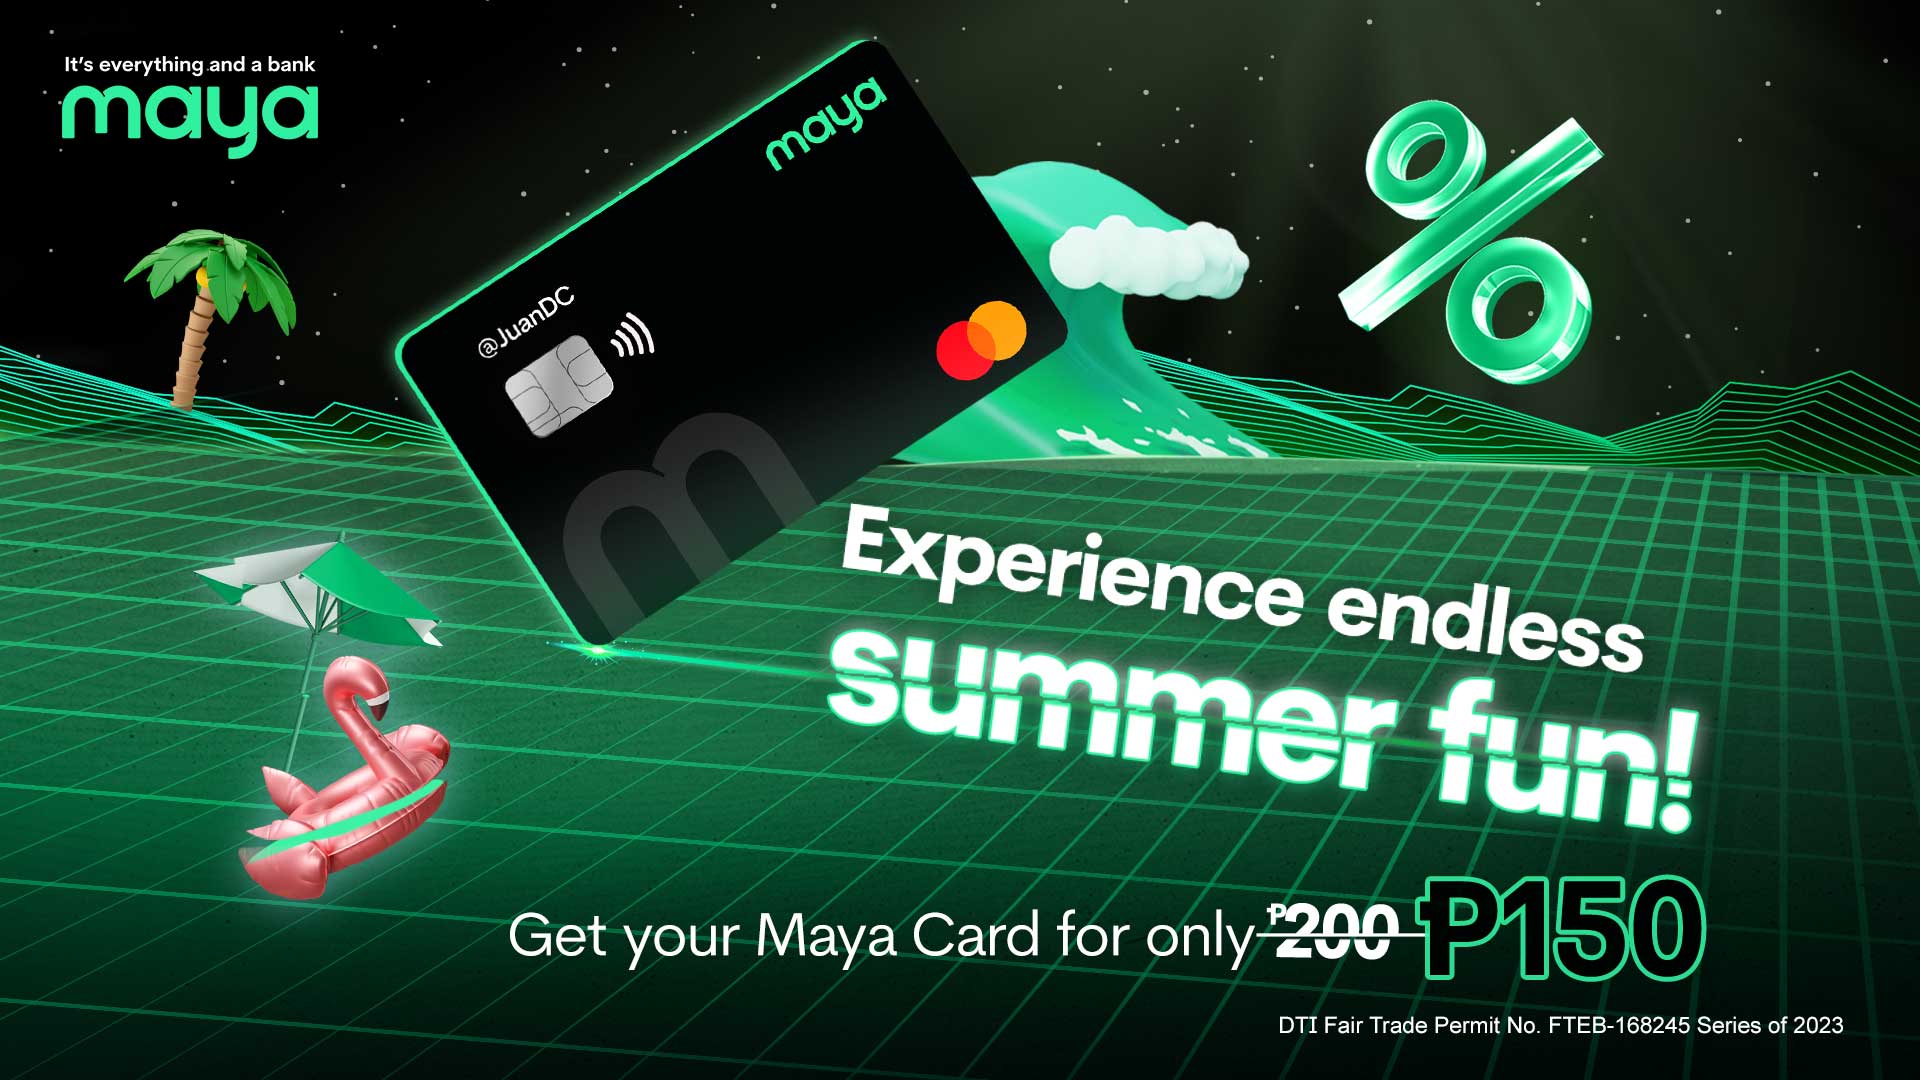 Purchase the new Maya Physical Card at 25% OFF!